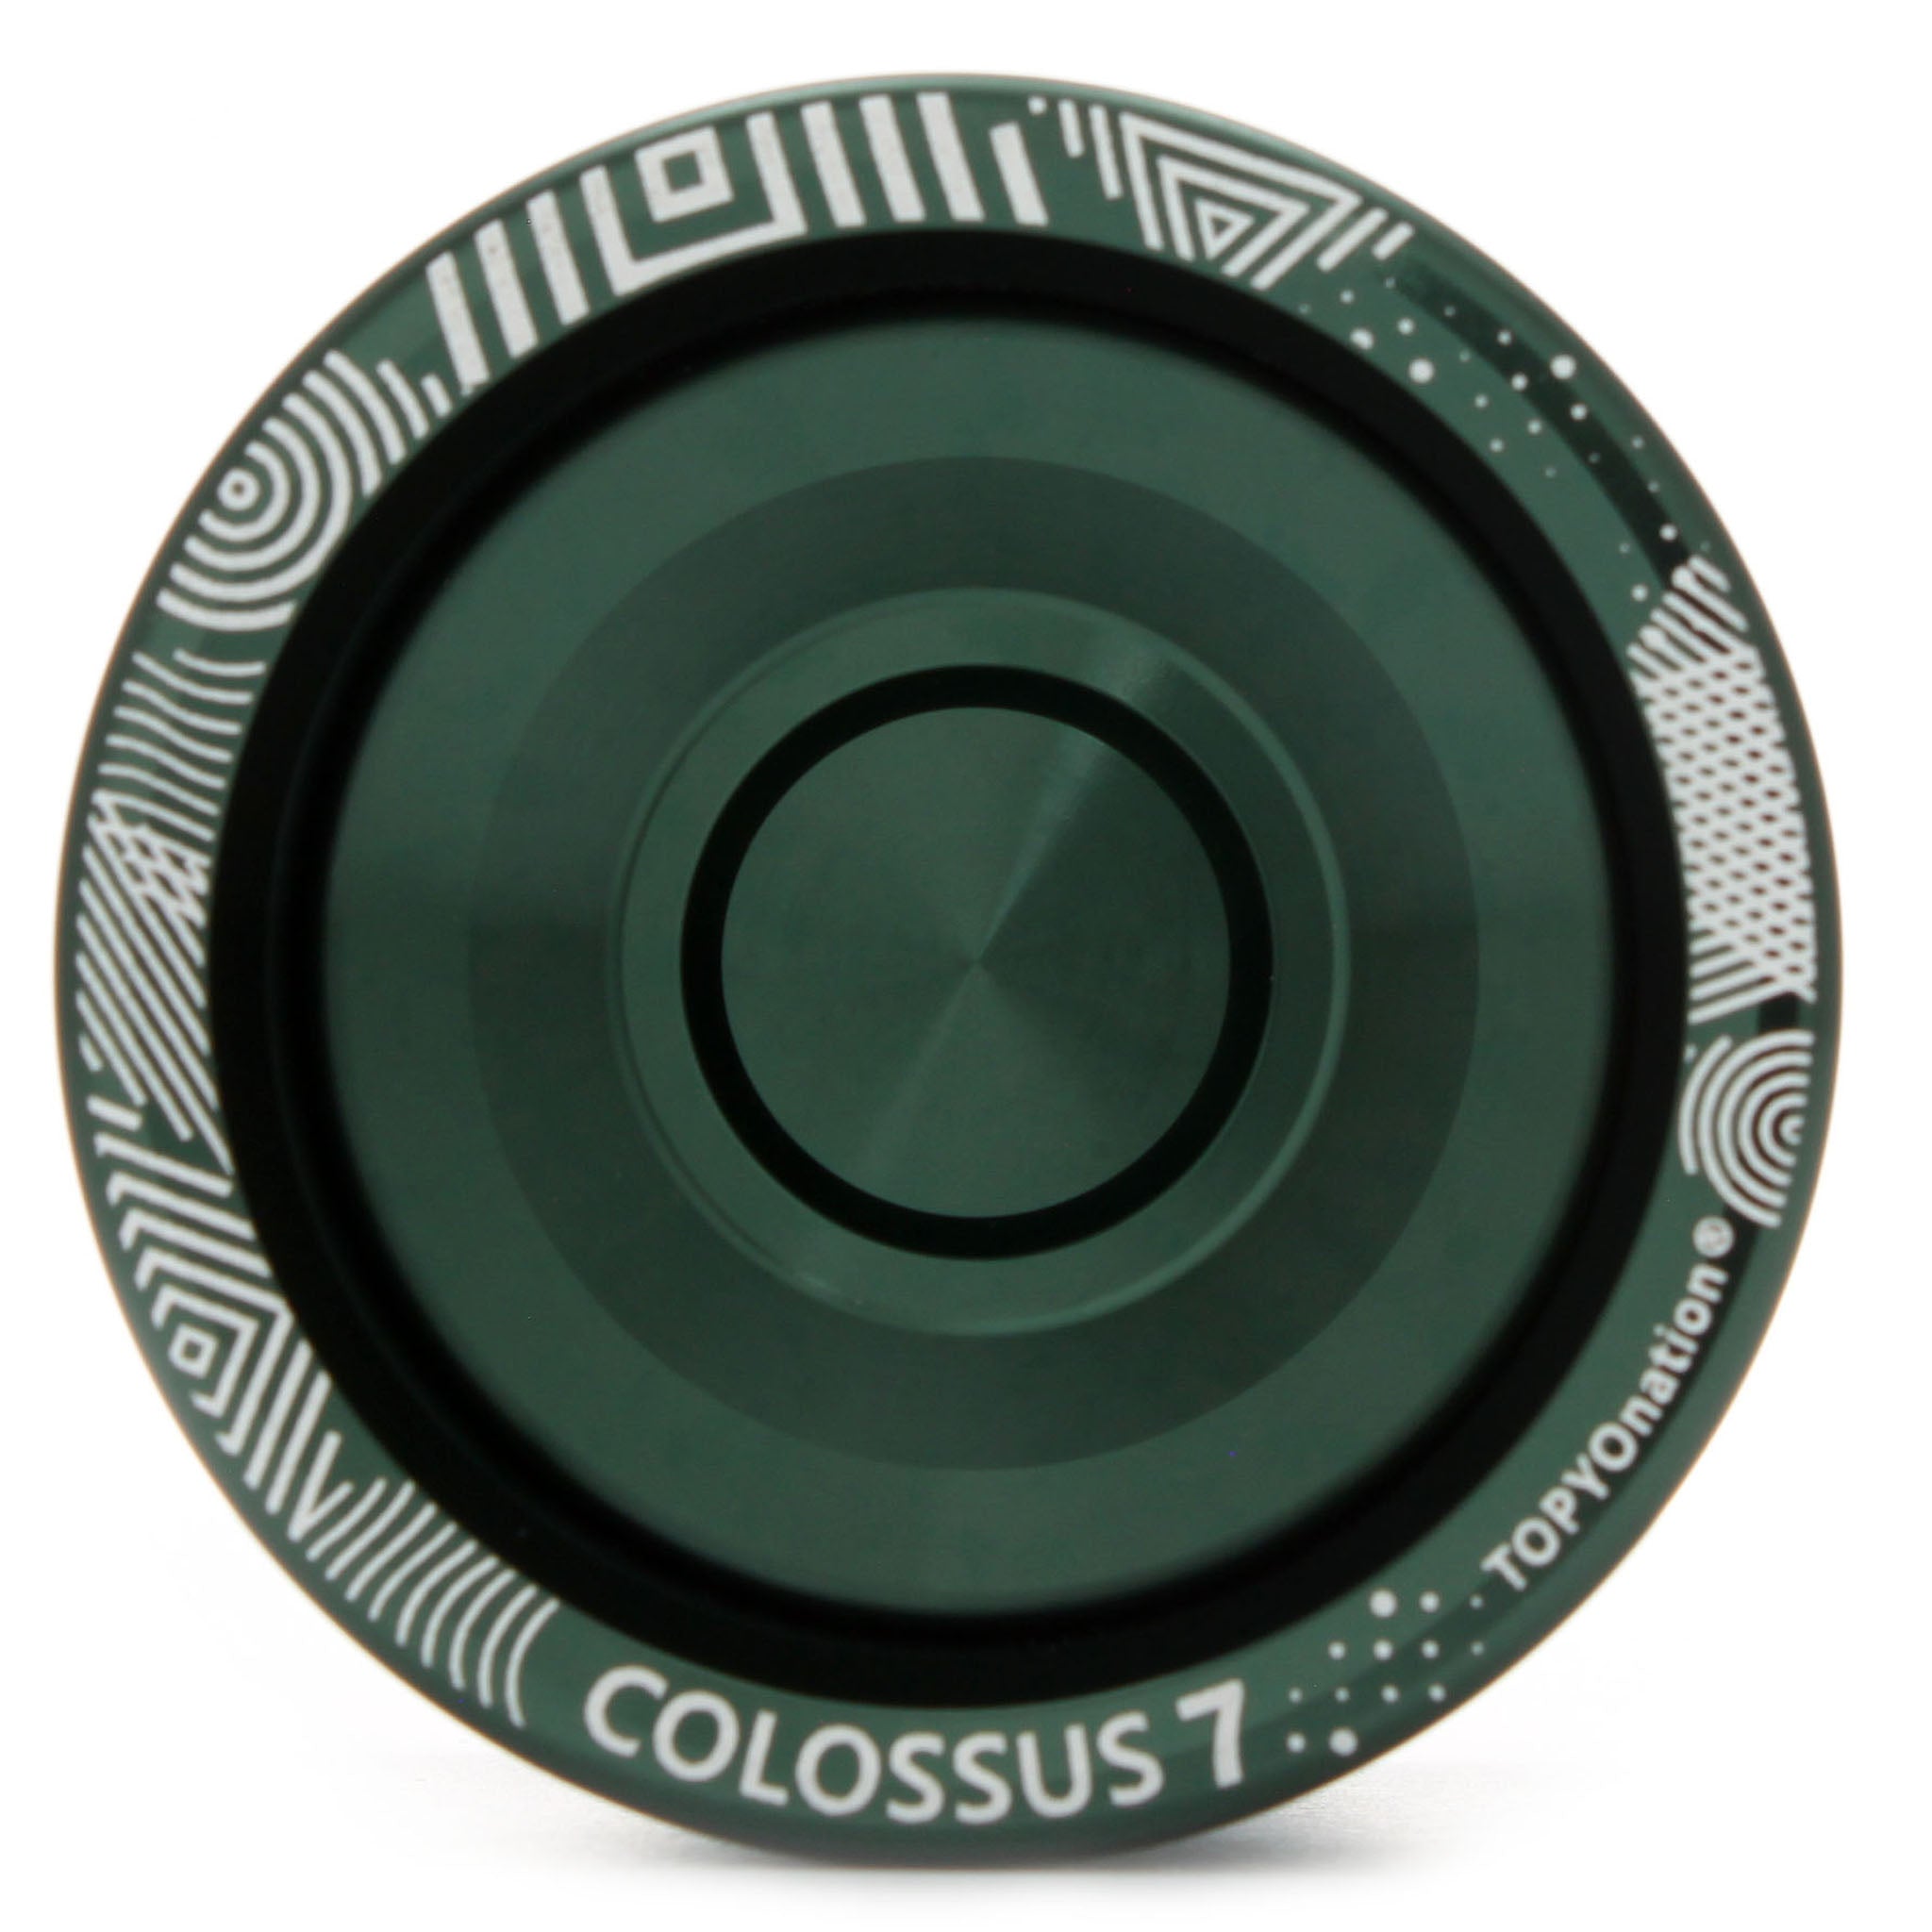 Colossus 7